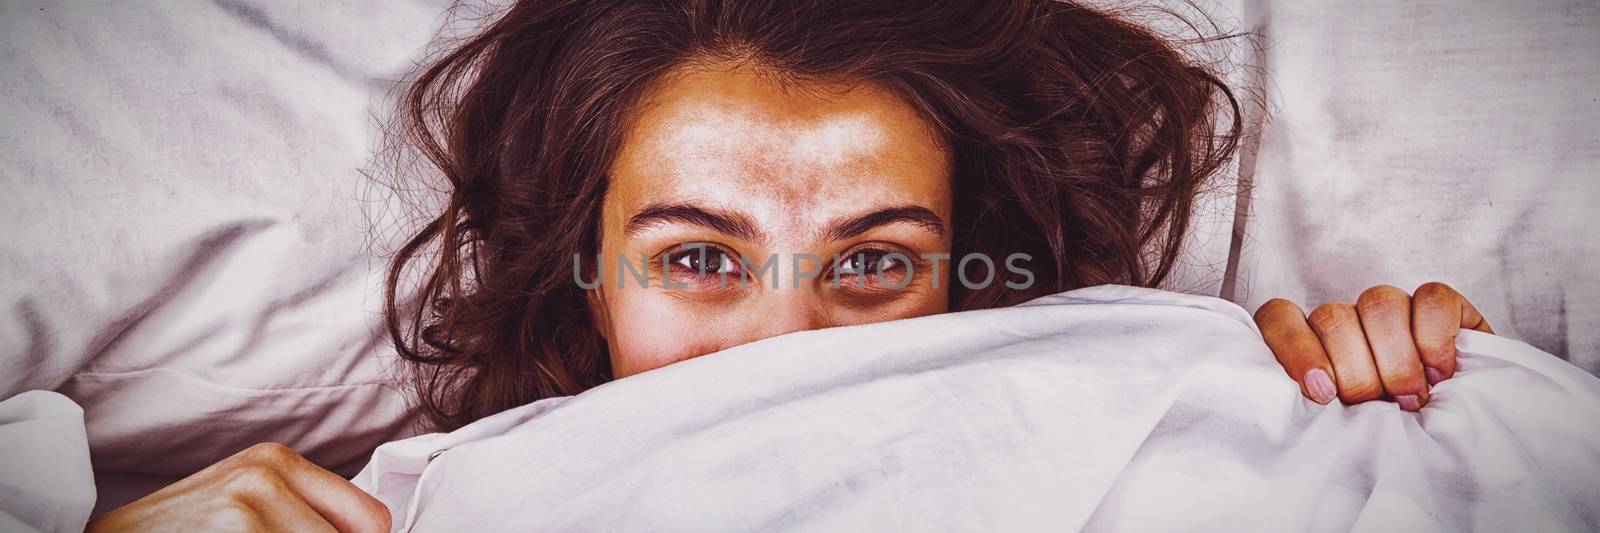 Woman hiding under blanket on bed by Wavebreakmedia